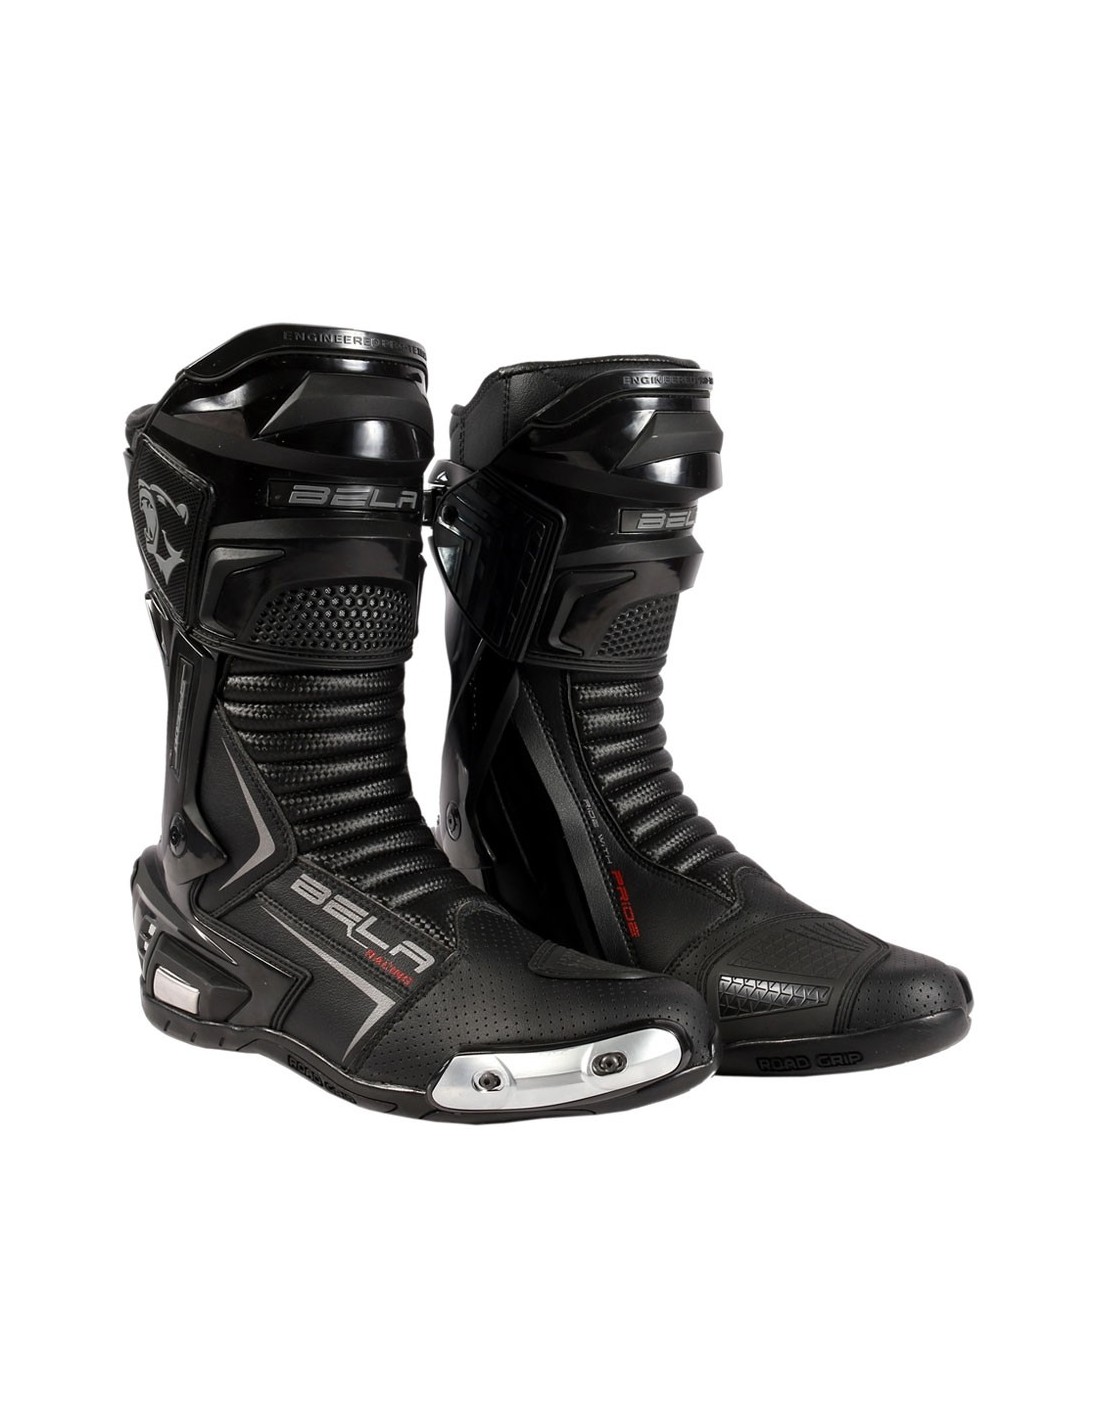 Bela Speedo 2.0 Motorcycle Racing Boots 